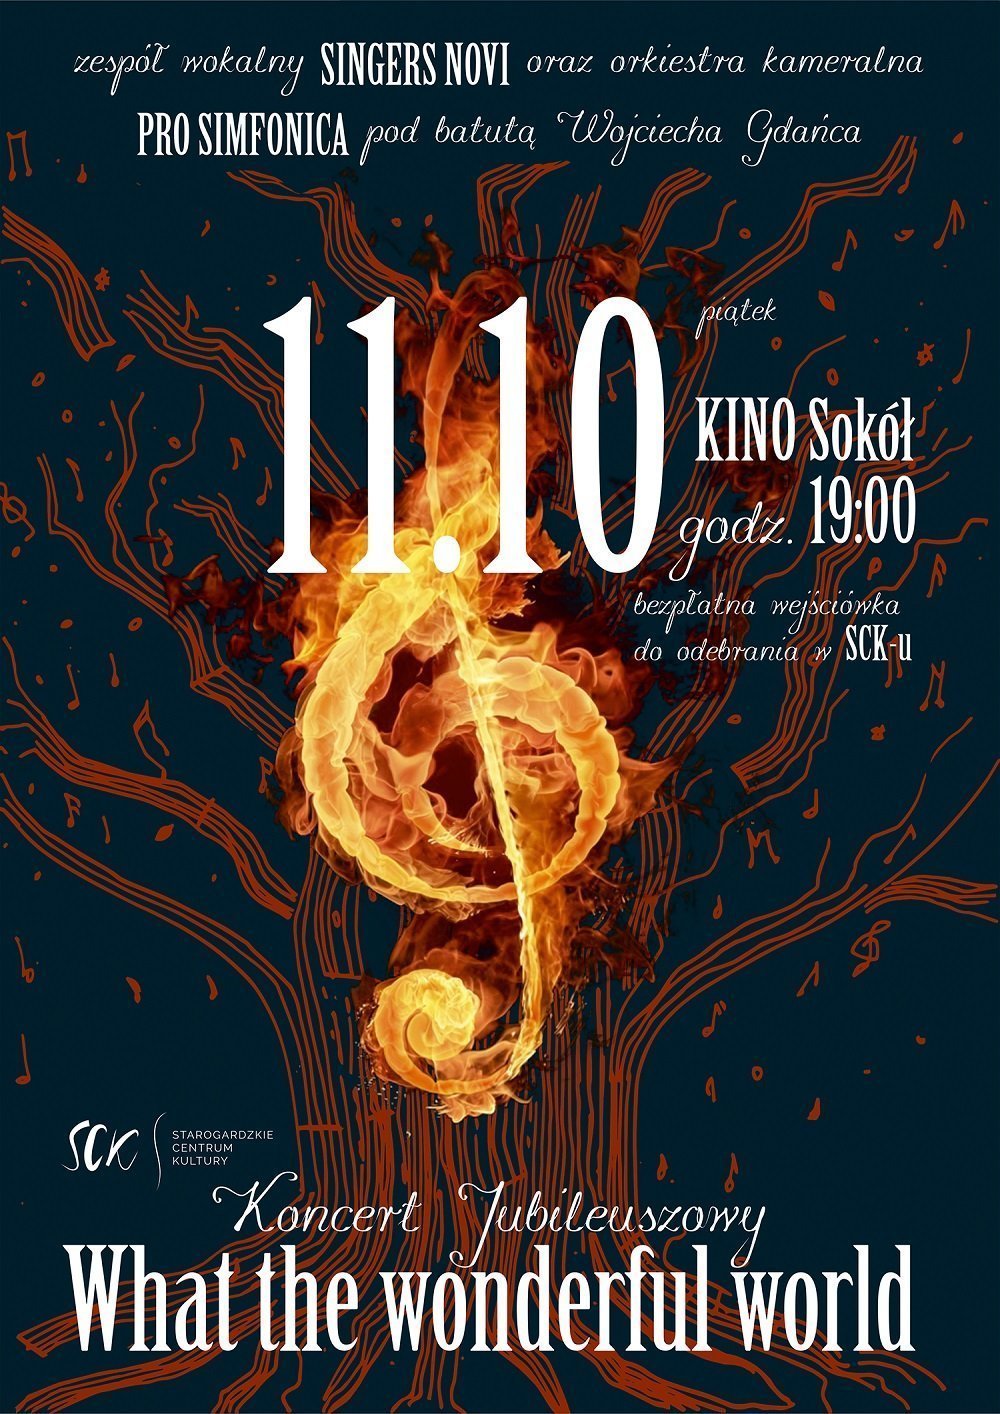 Koncert Jubileuszowy Singers Novi i Pro Simfonica "What a wonderful world"